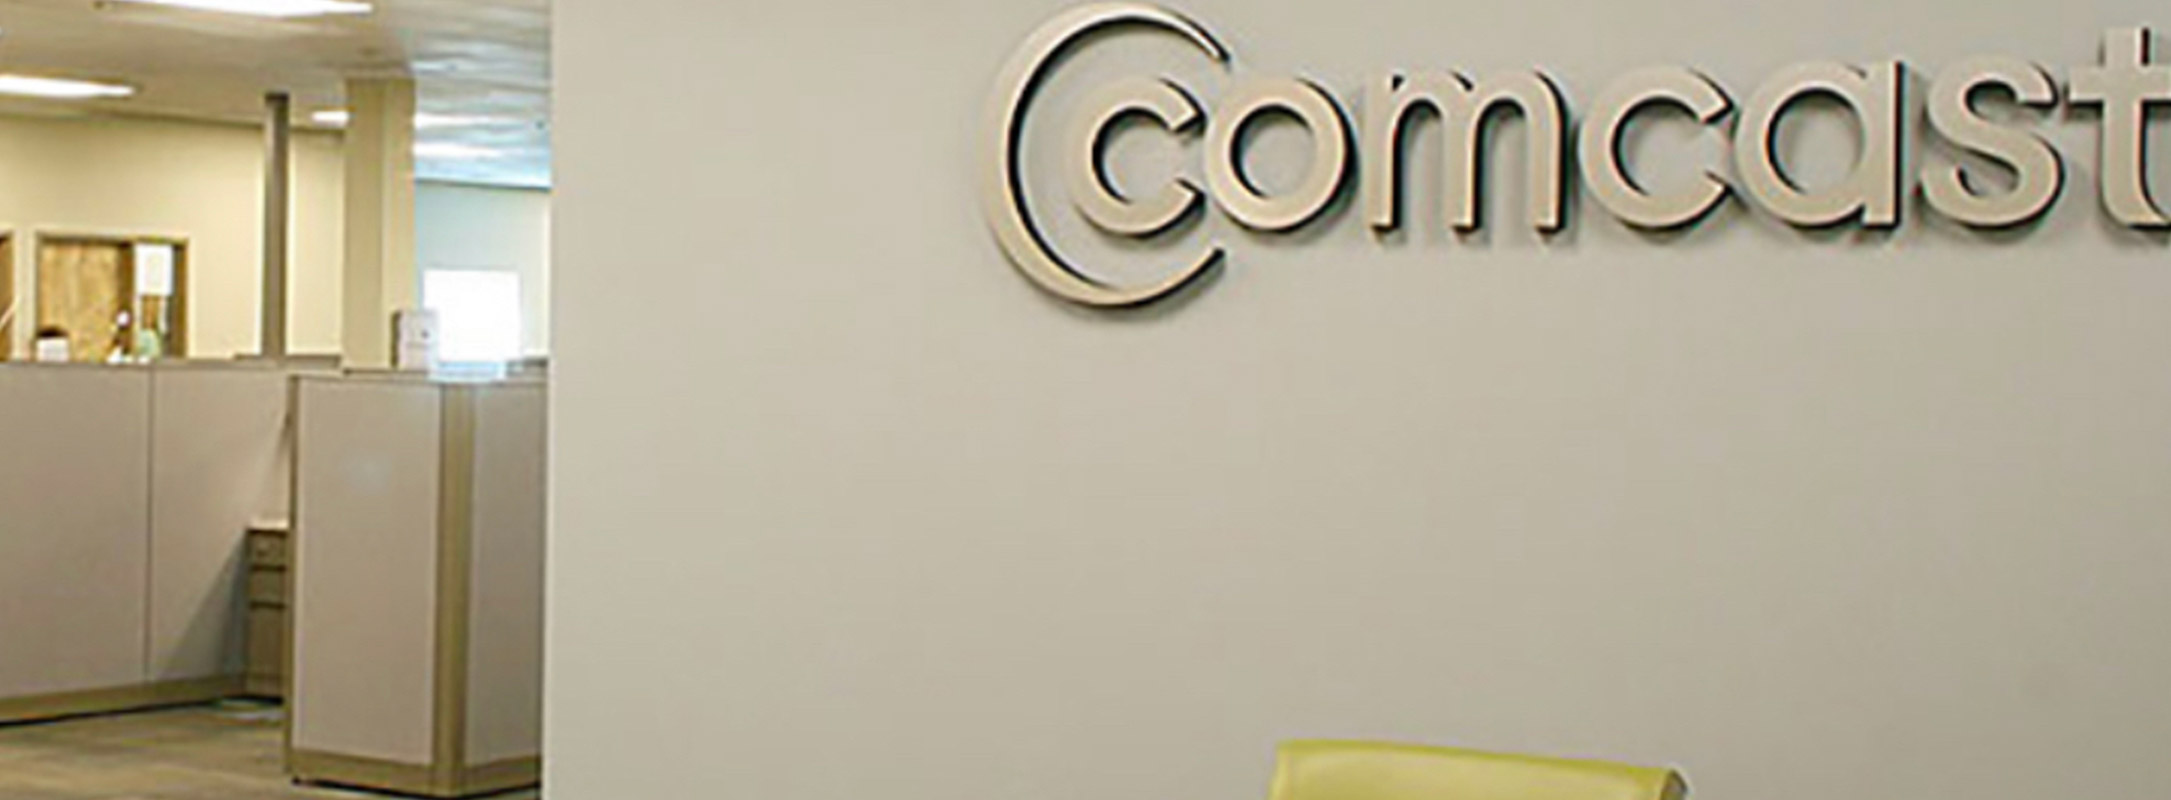 Comcast Corporate Center, Boca Raton